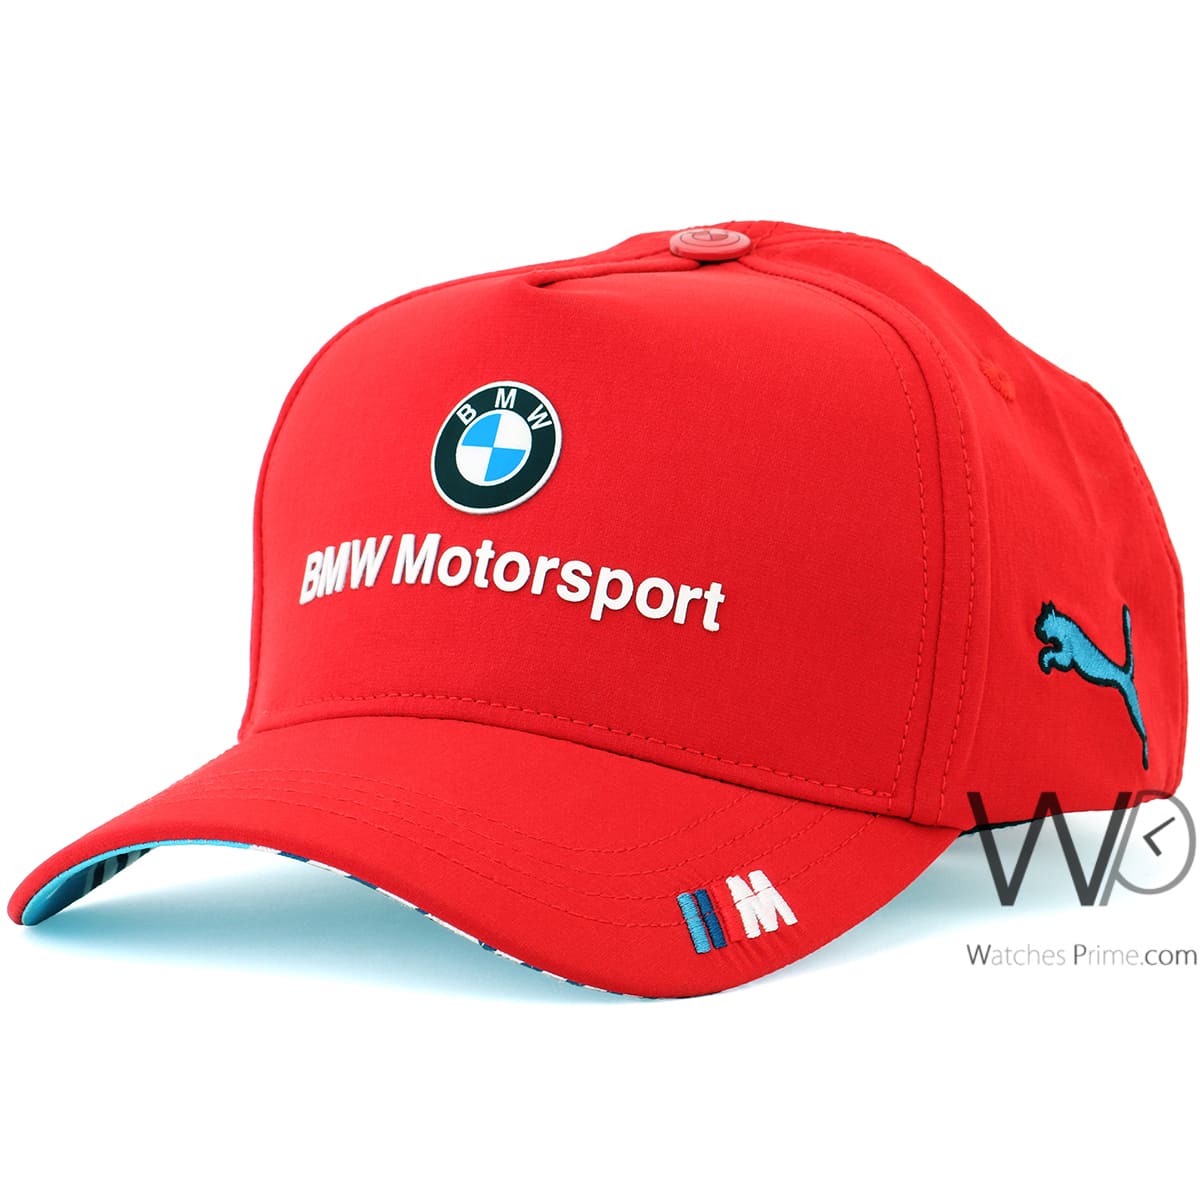 Puma BMW M Motorsport red baseball cap men